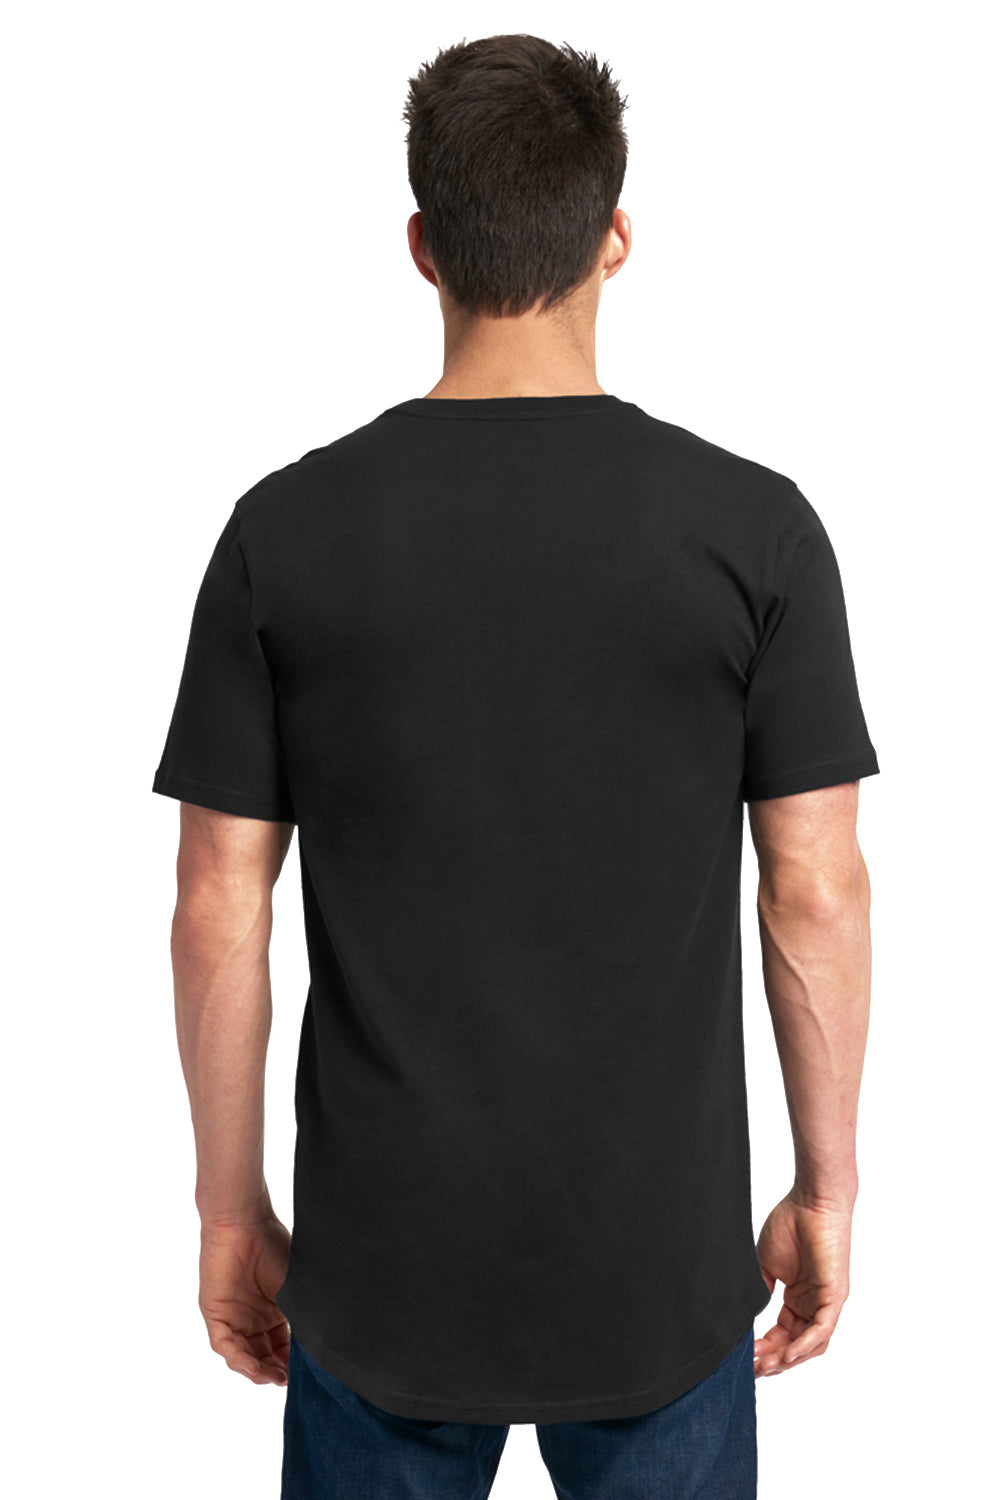 Next Level 3602 Mens Long Body Jersey Short Sleeve Crewneck T-Shirt Black Back